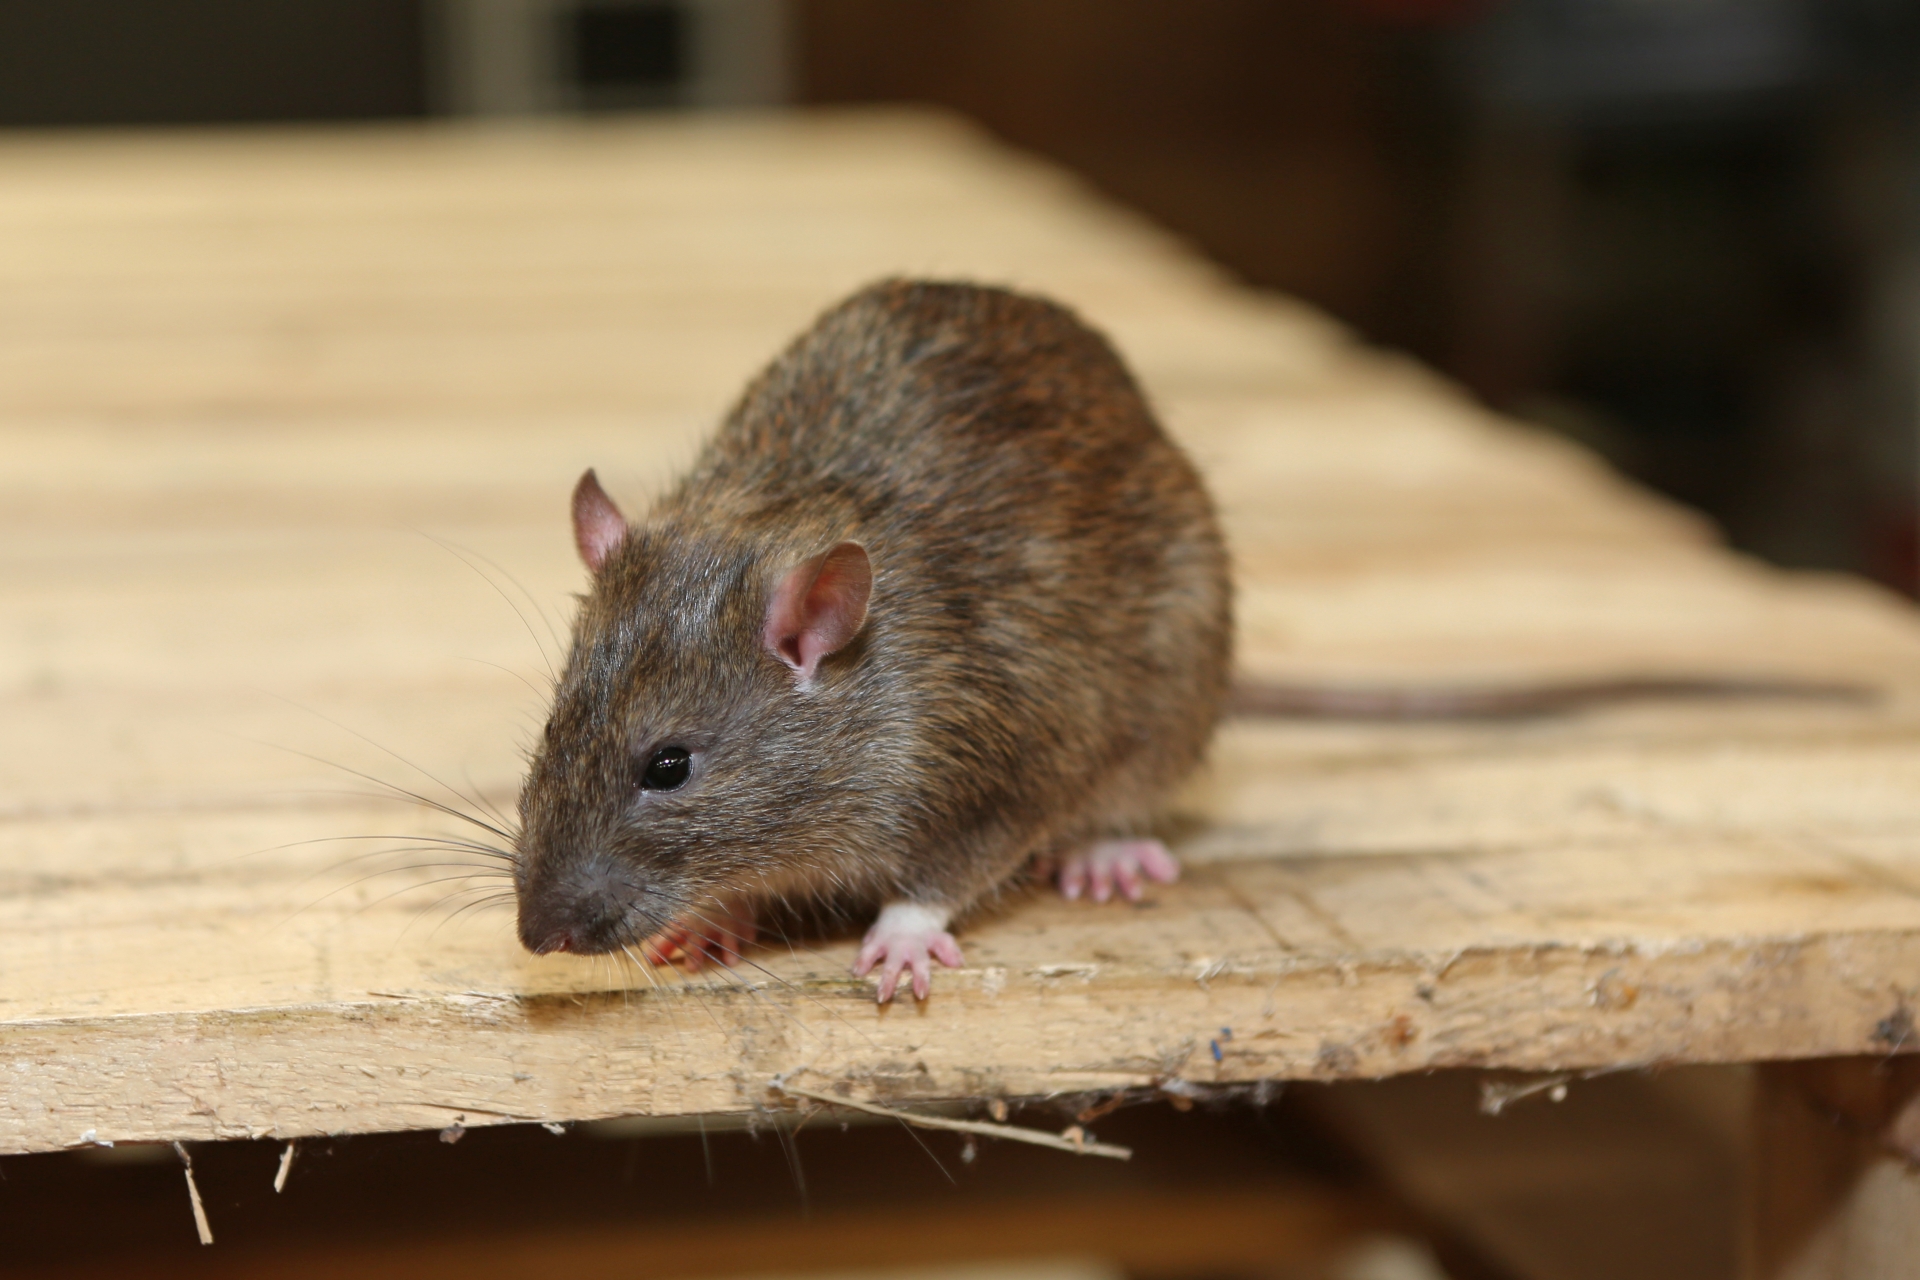 Rat extermination, Pest Control in Hayes, Harlington, UB3, UB4. Call Now 020 8166 9746